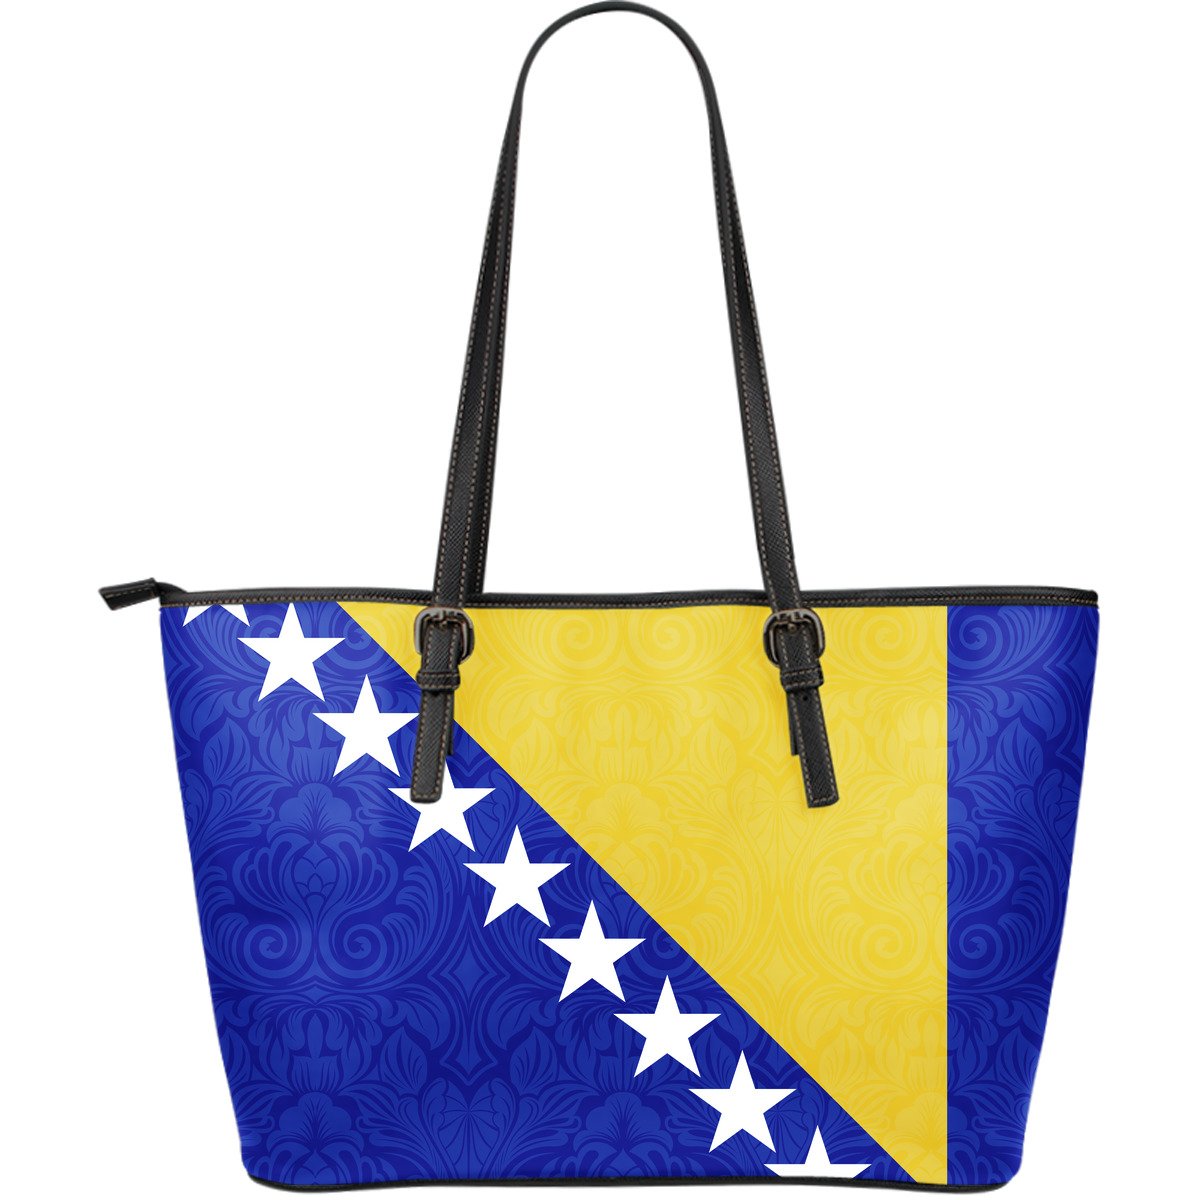 bosnia-and-herzegovina-bag-bosnia-and-herzegovina-flag-leather-tote-bag